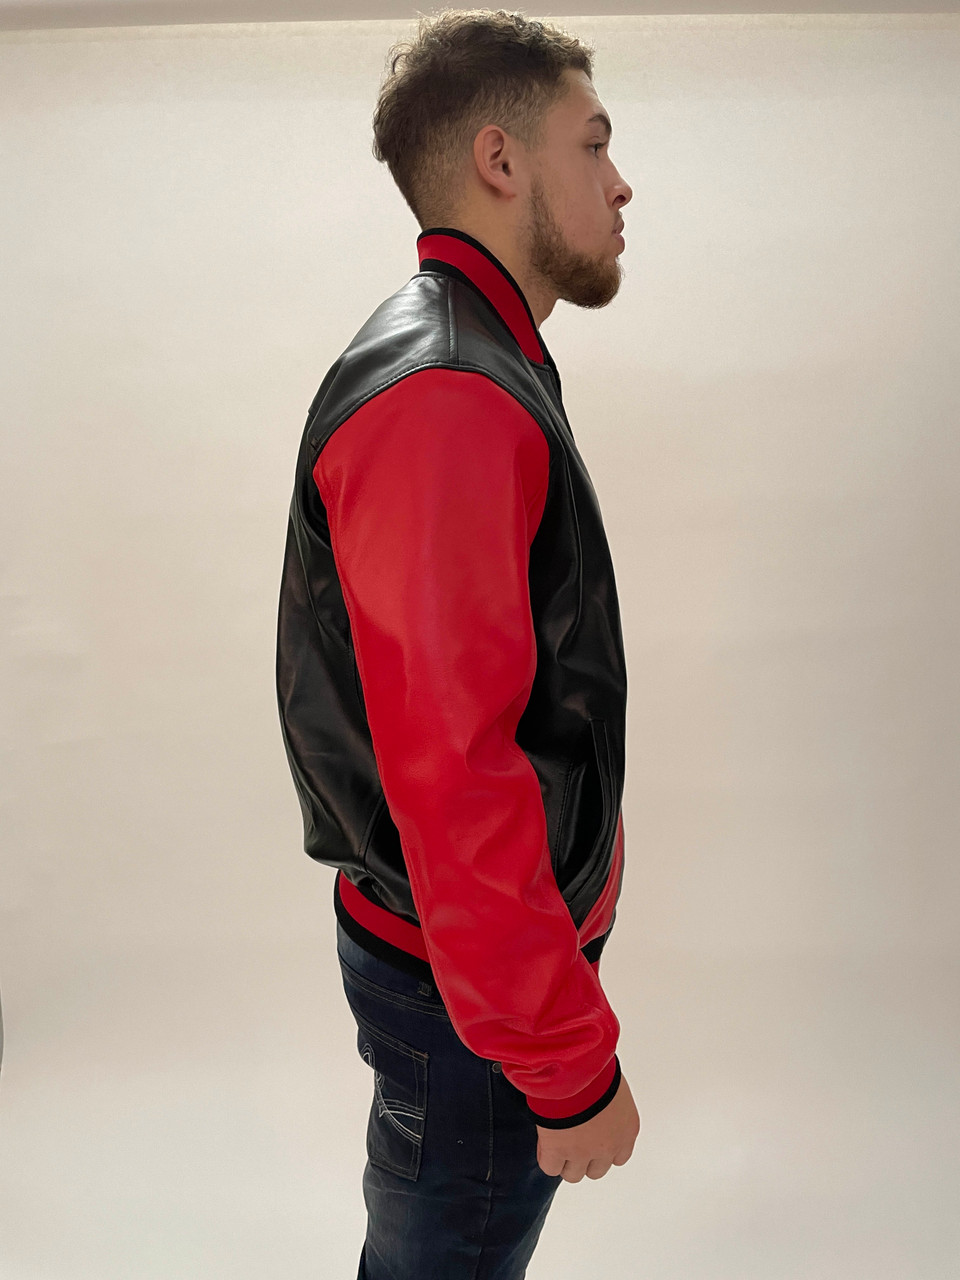 BAIT Baseball Jacket (black / red)